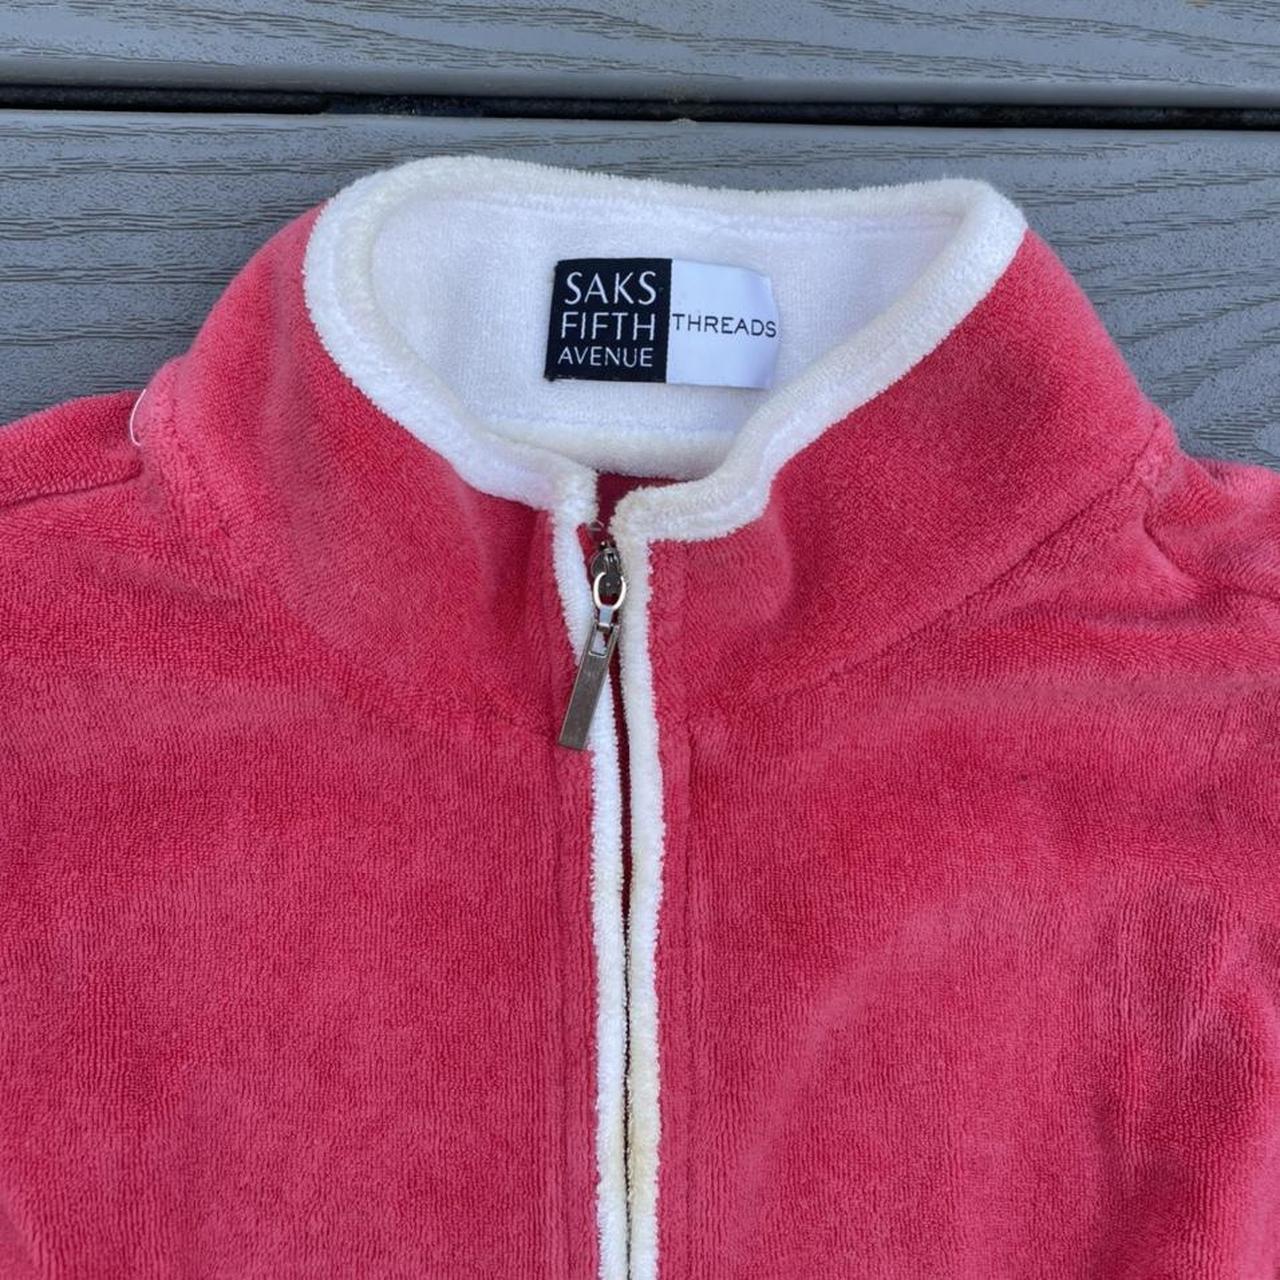 A. Saks Women's White and Red Sweatshirt (2)